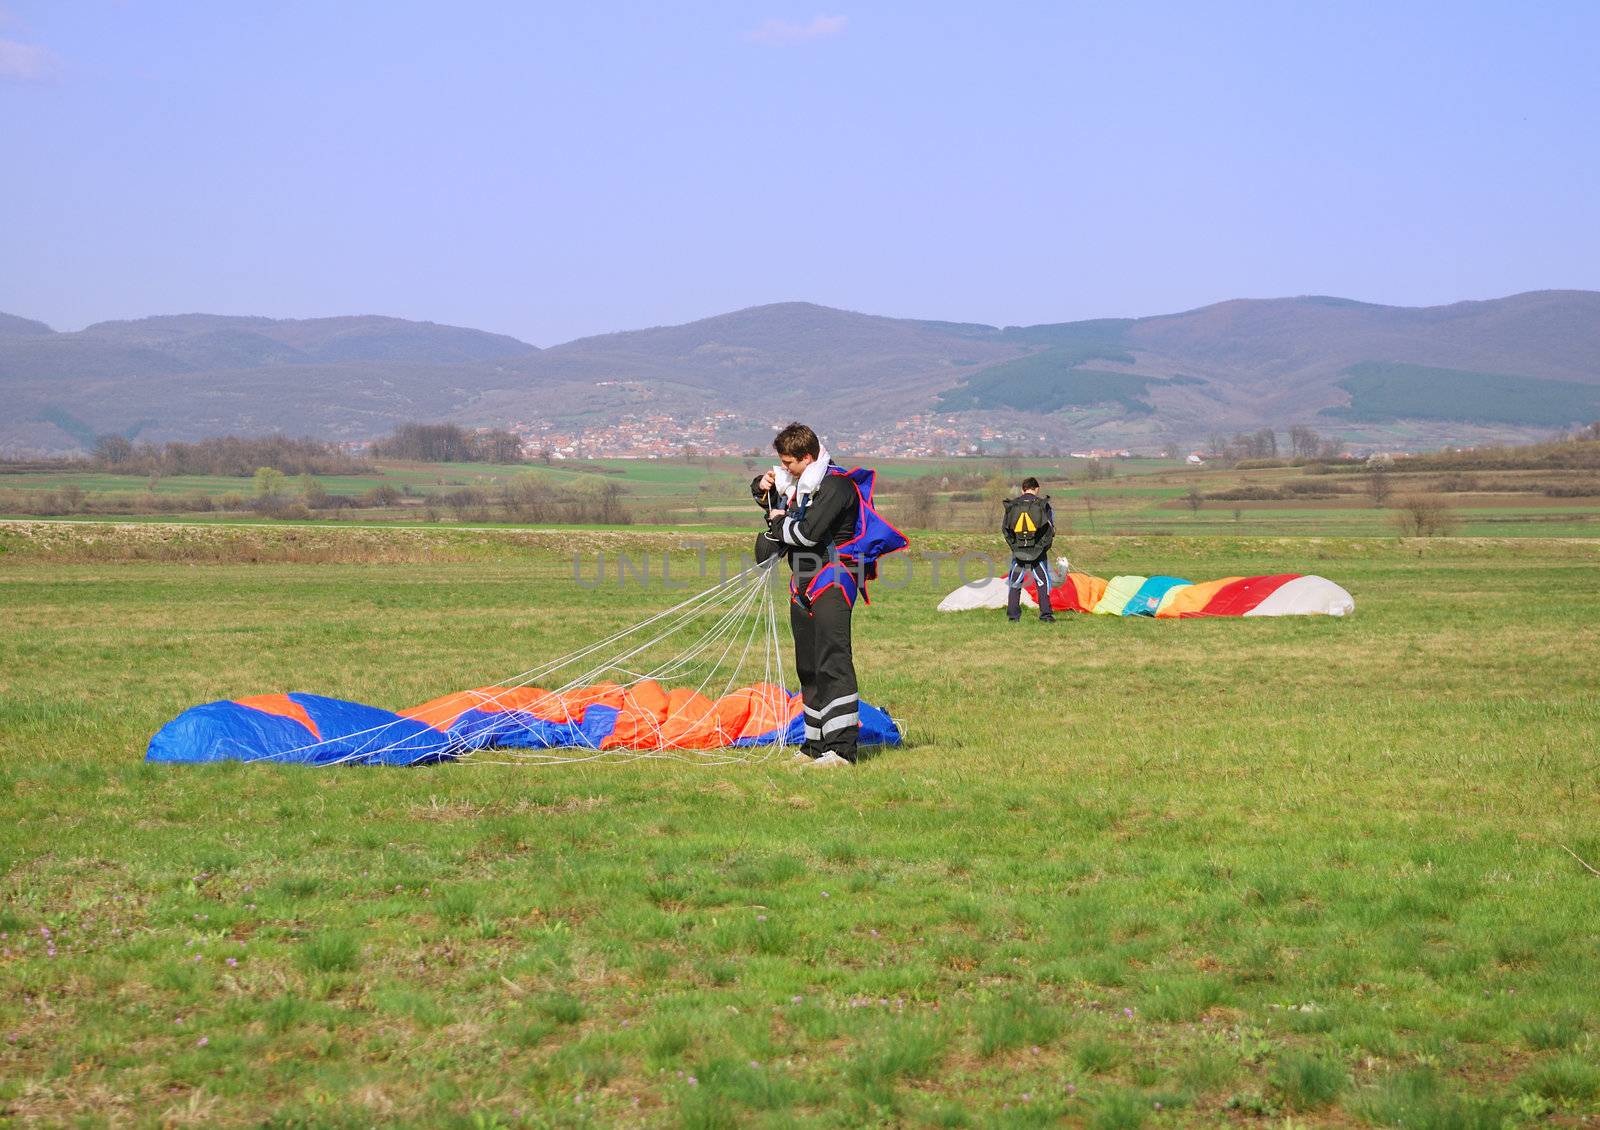 Parachutes landed by whitechild